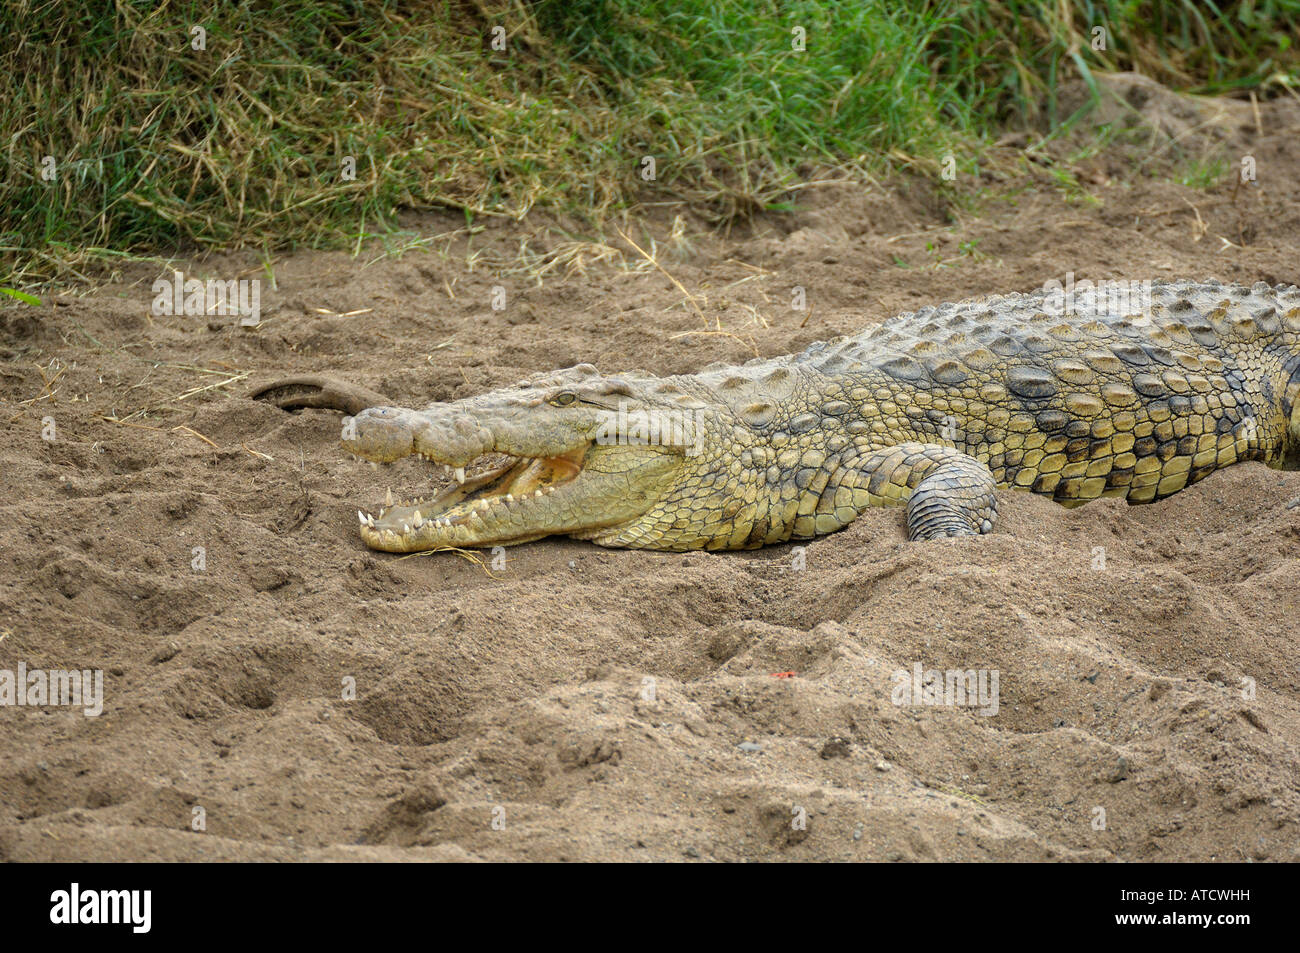 A Crocodile at the Grumeti River, Serengeti, Tanzania Stock Photo